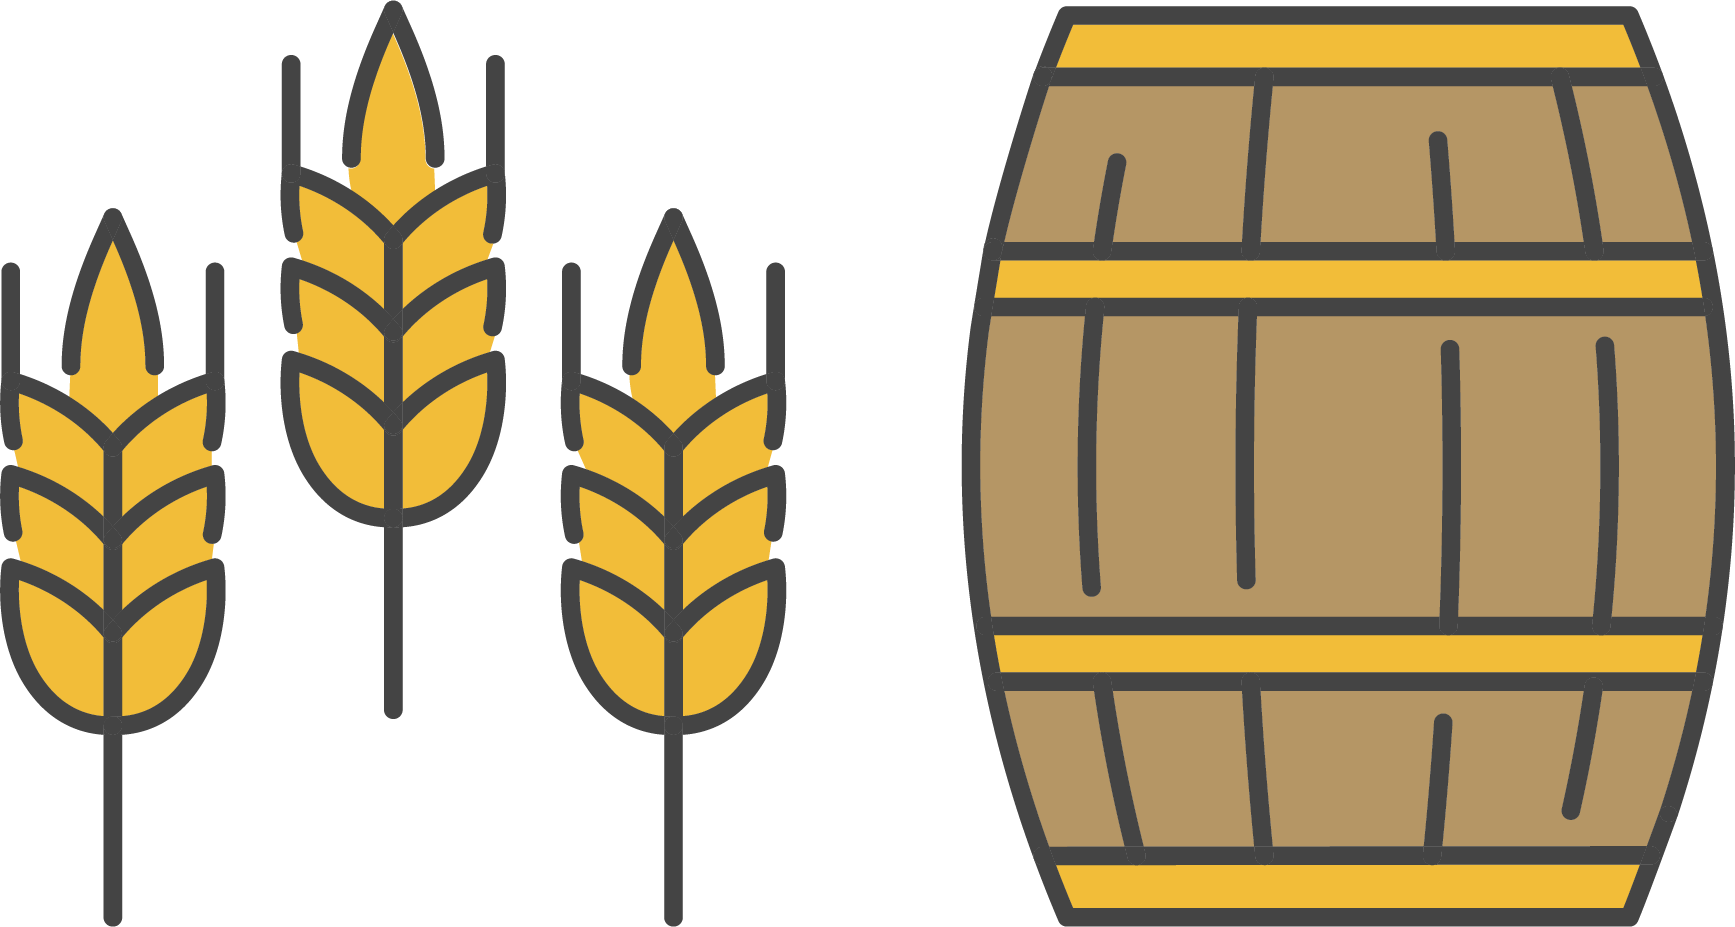 wheat and barrel illustrations